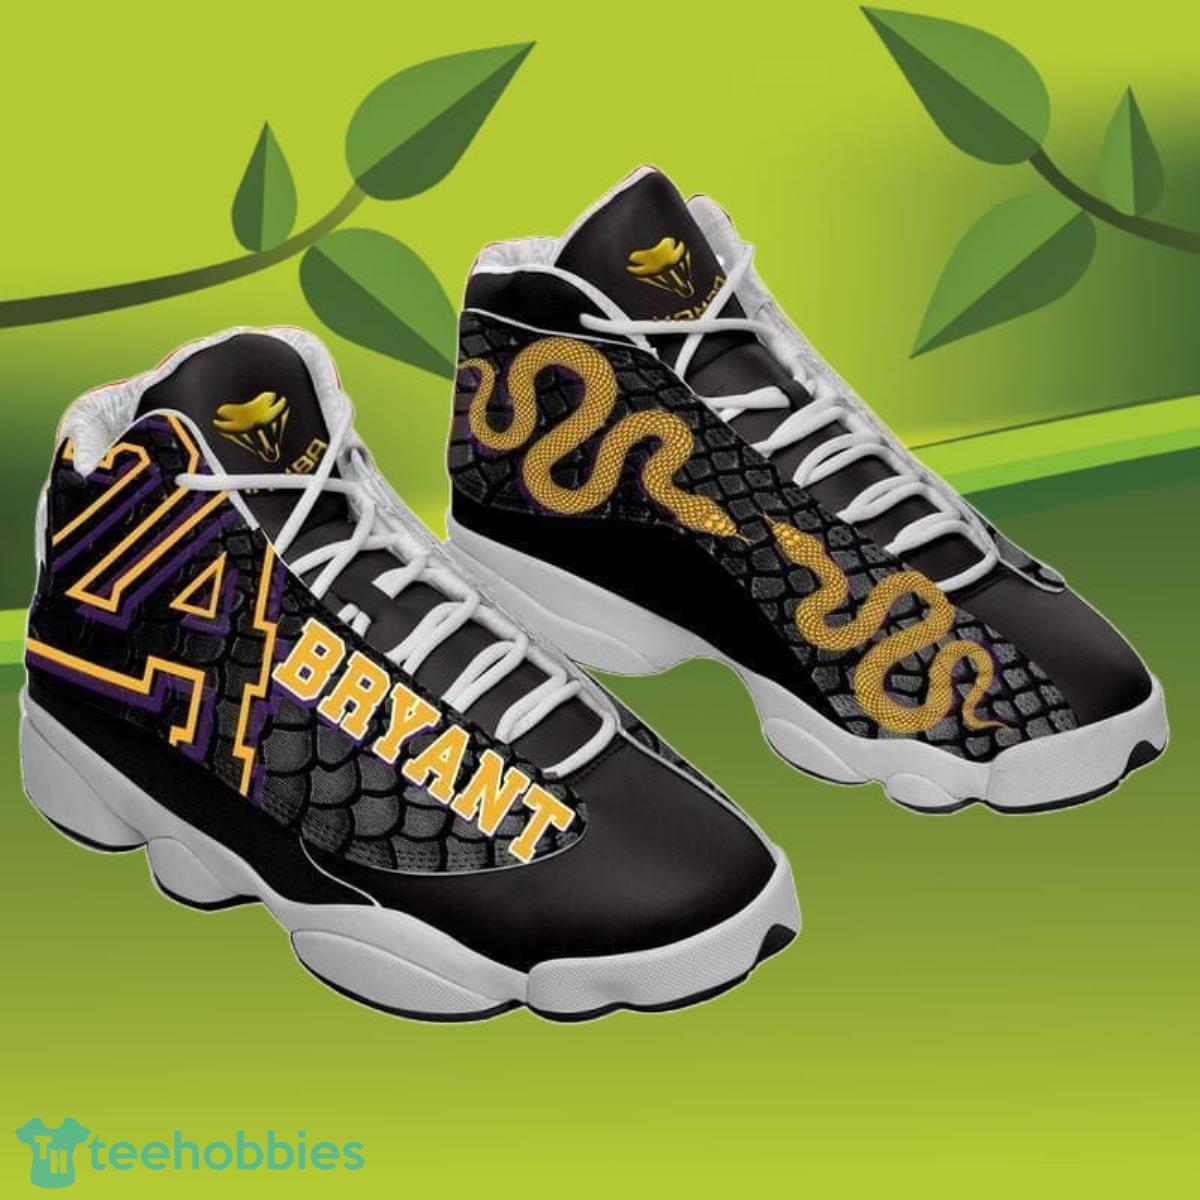 Kobe Bryant Air Jordan 13 Sneakers Best Gift For Friends Product Photo 1